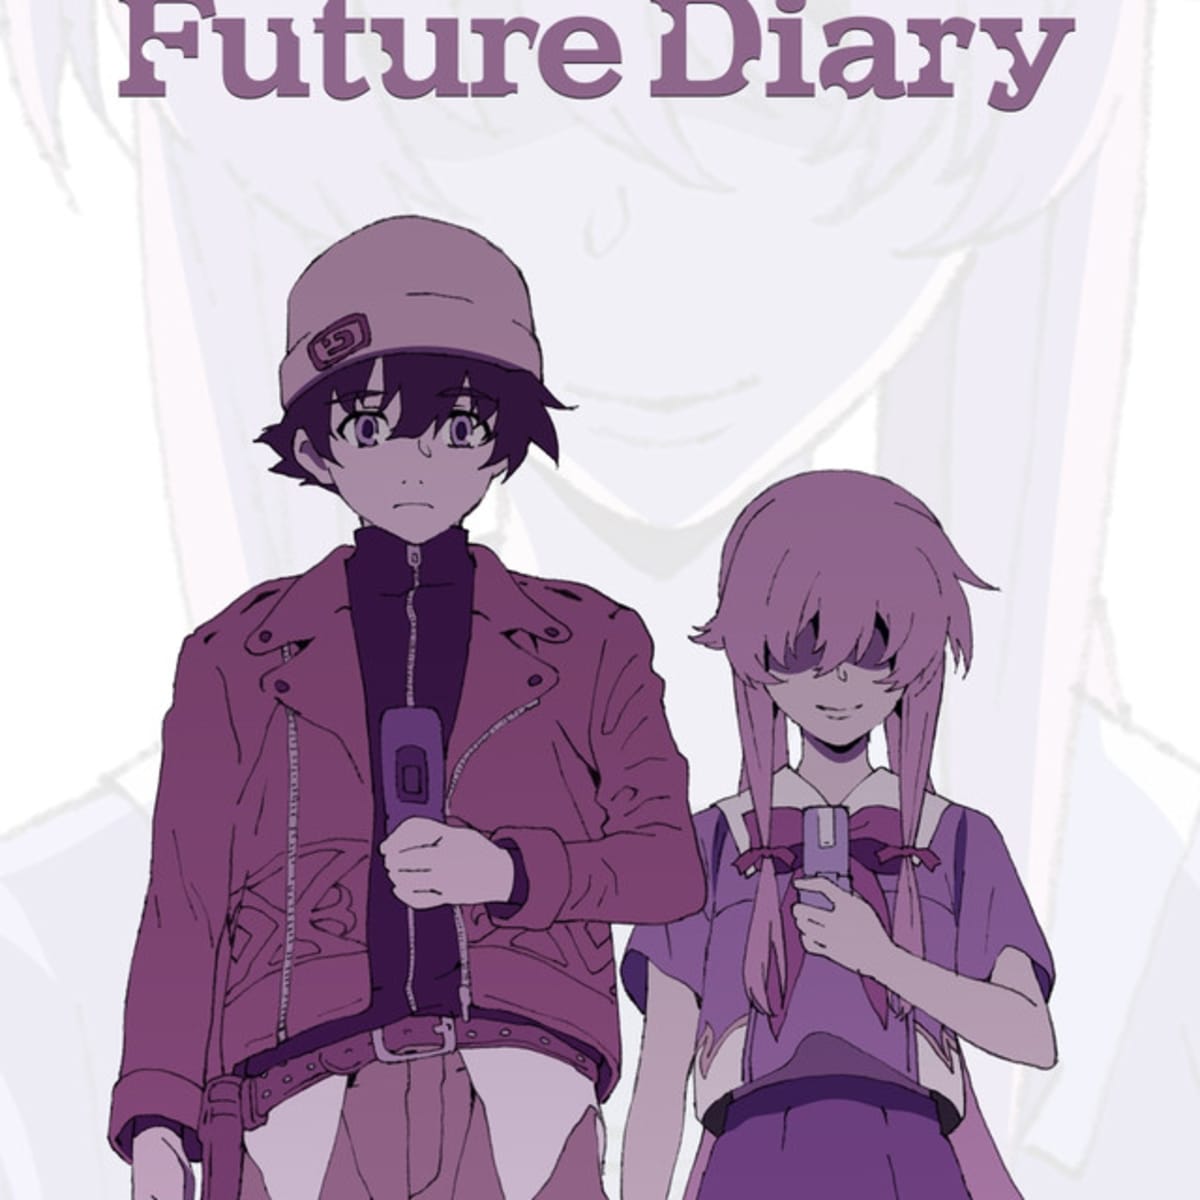 Mirai Nikki/#51515  Mirai nikki, Mirai nikki future diary, Future diary